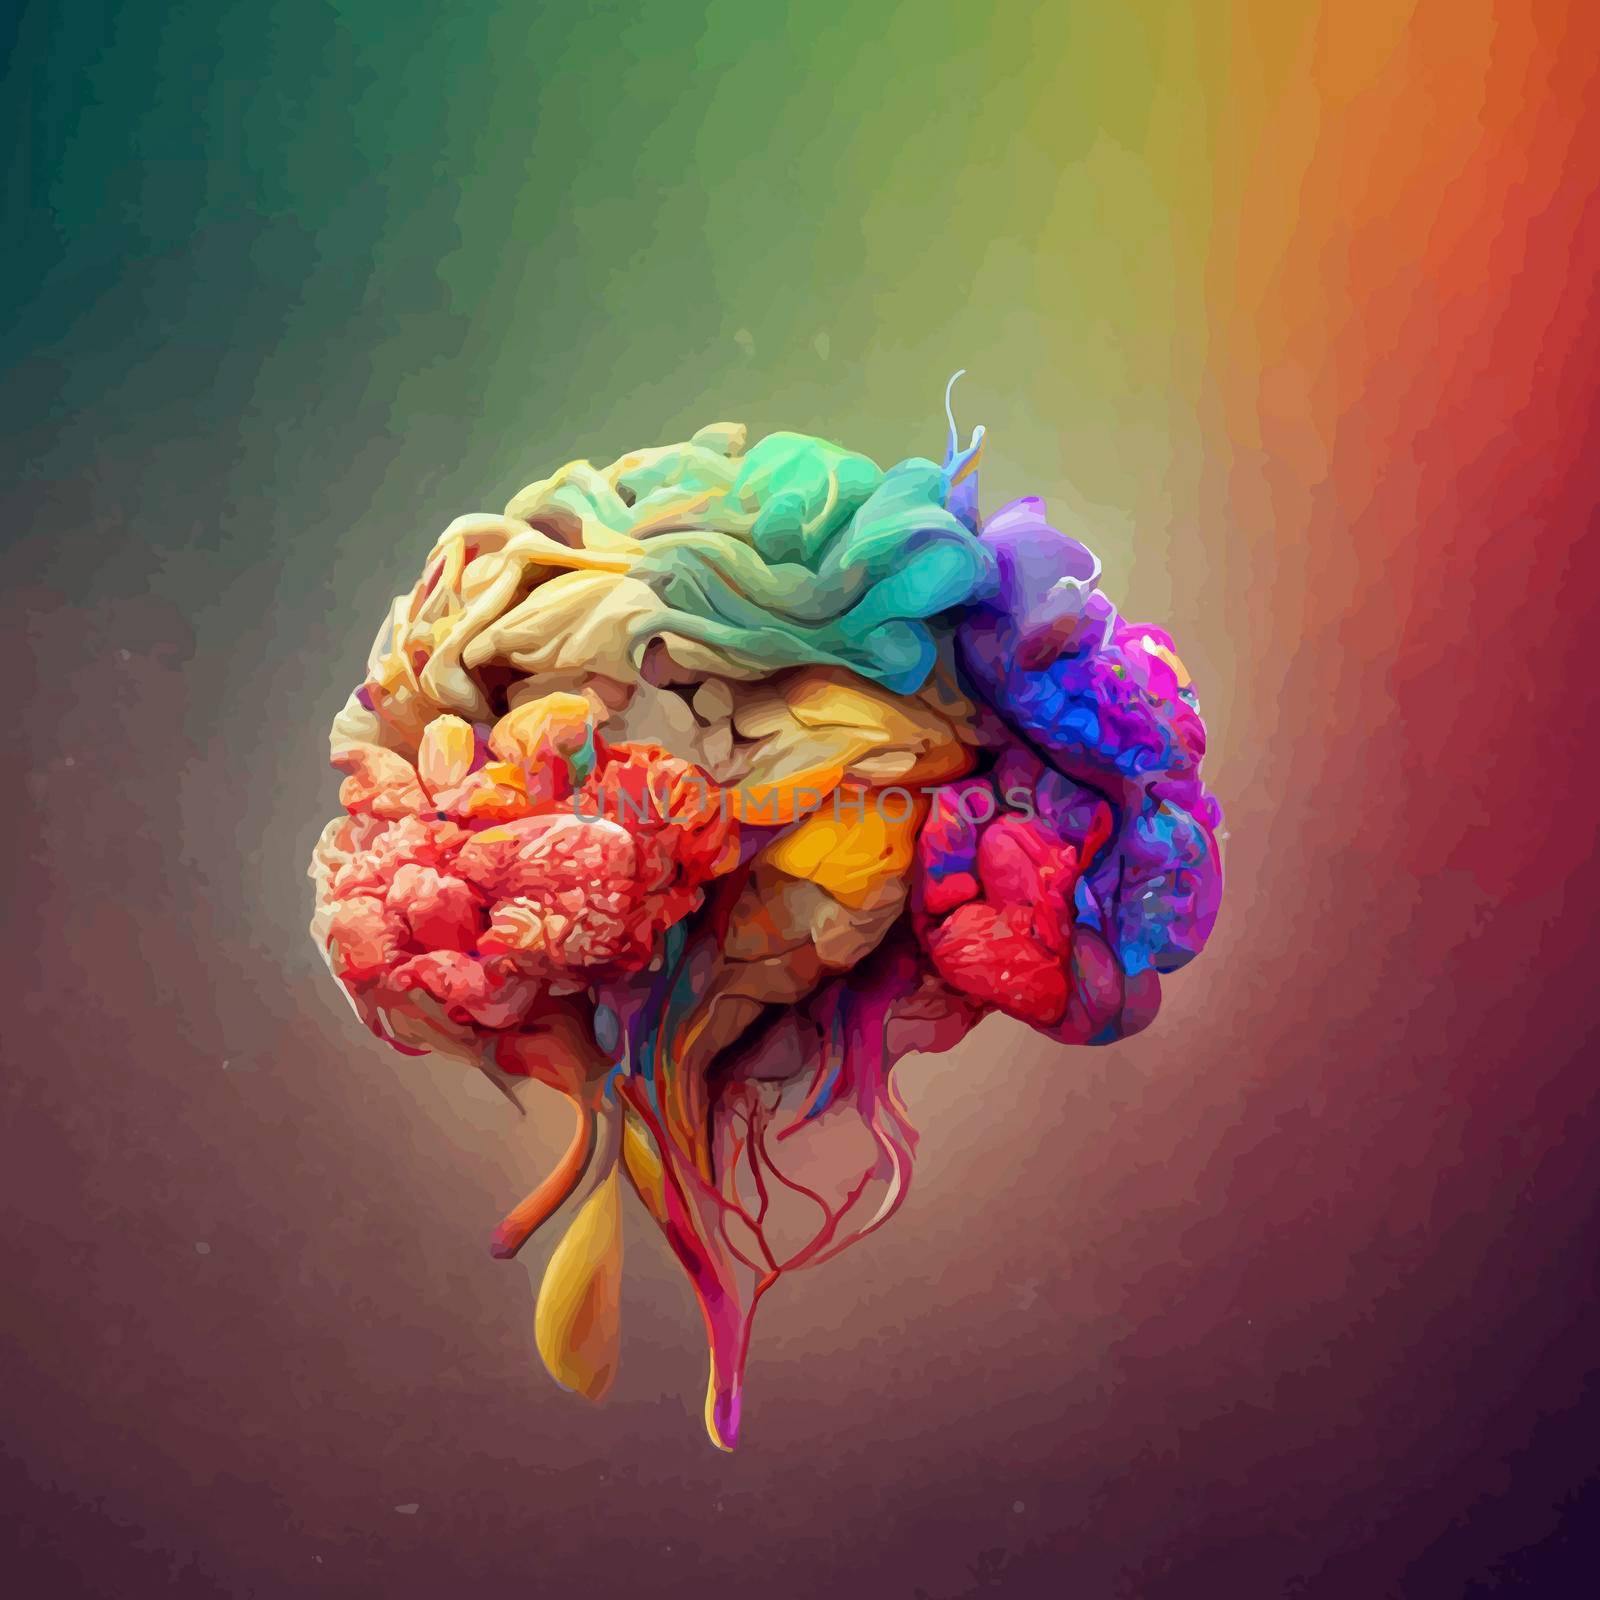 Colorful illustration of the human brain. detailed 2d illustration of the human brain. parts of the brain. by JpRamos